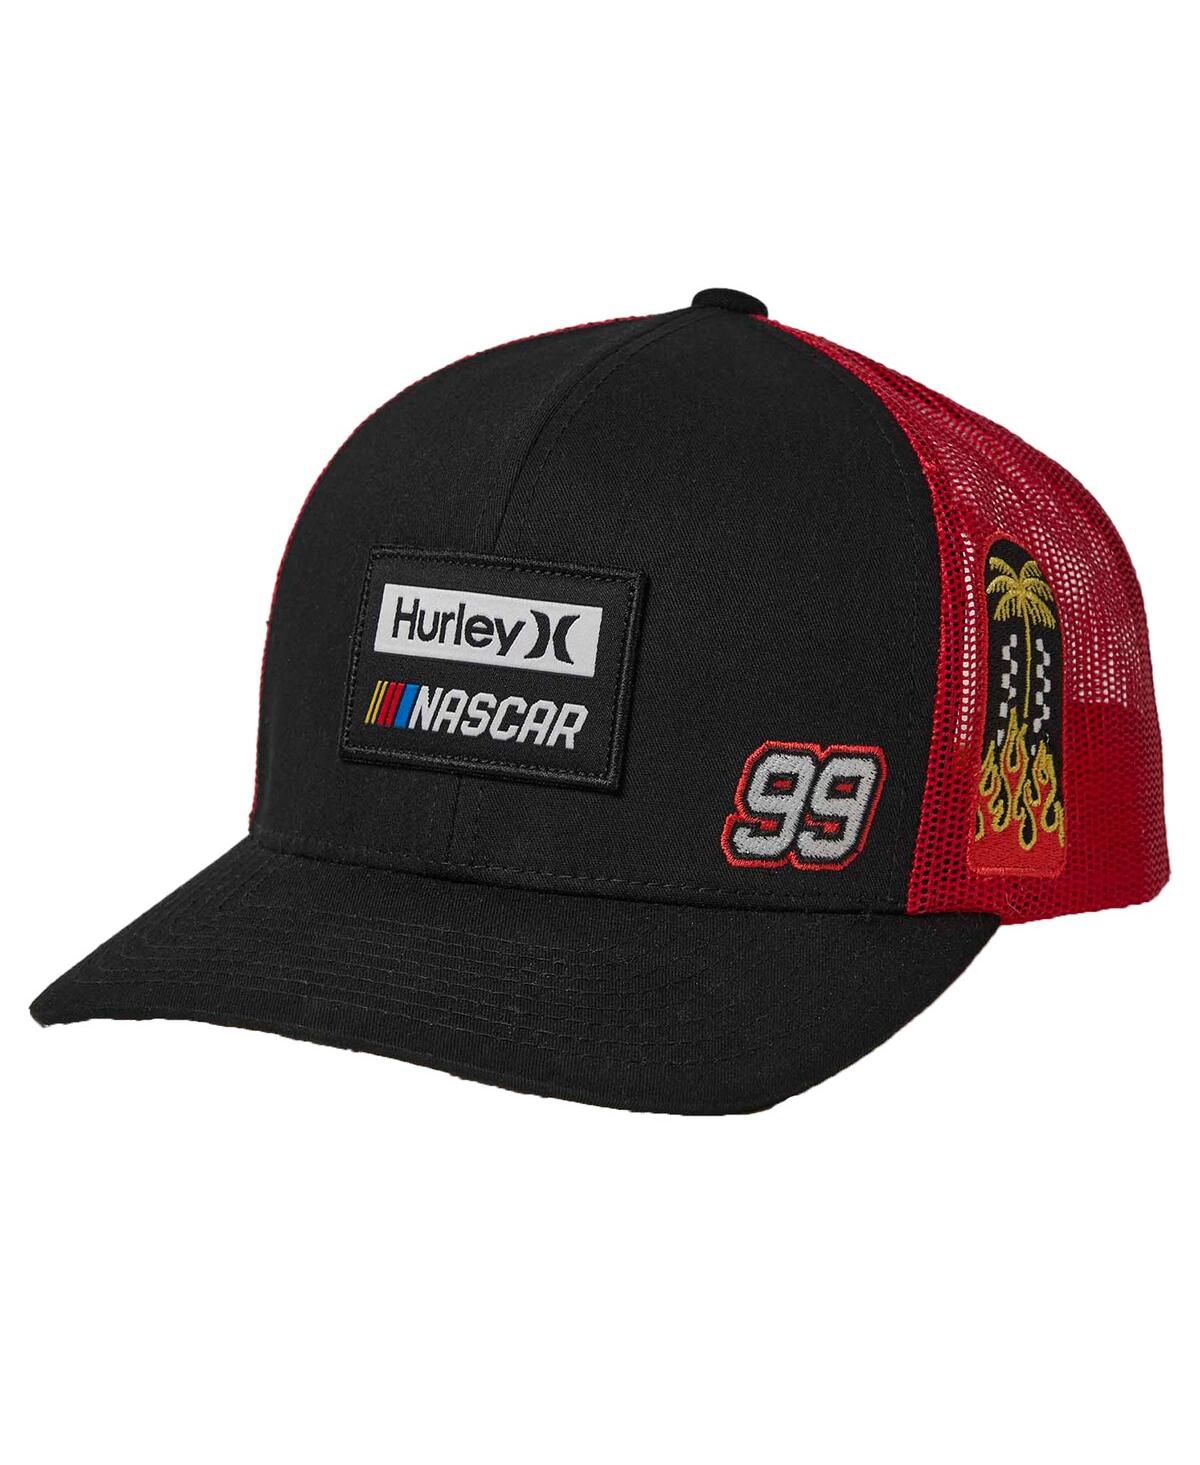 HURLEY MEN'S HURLEY BLACK, RED NASCAR TRUCKER SNAPBACK HAT